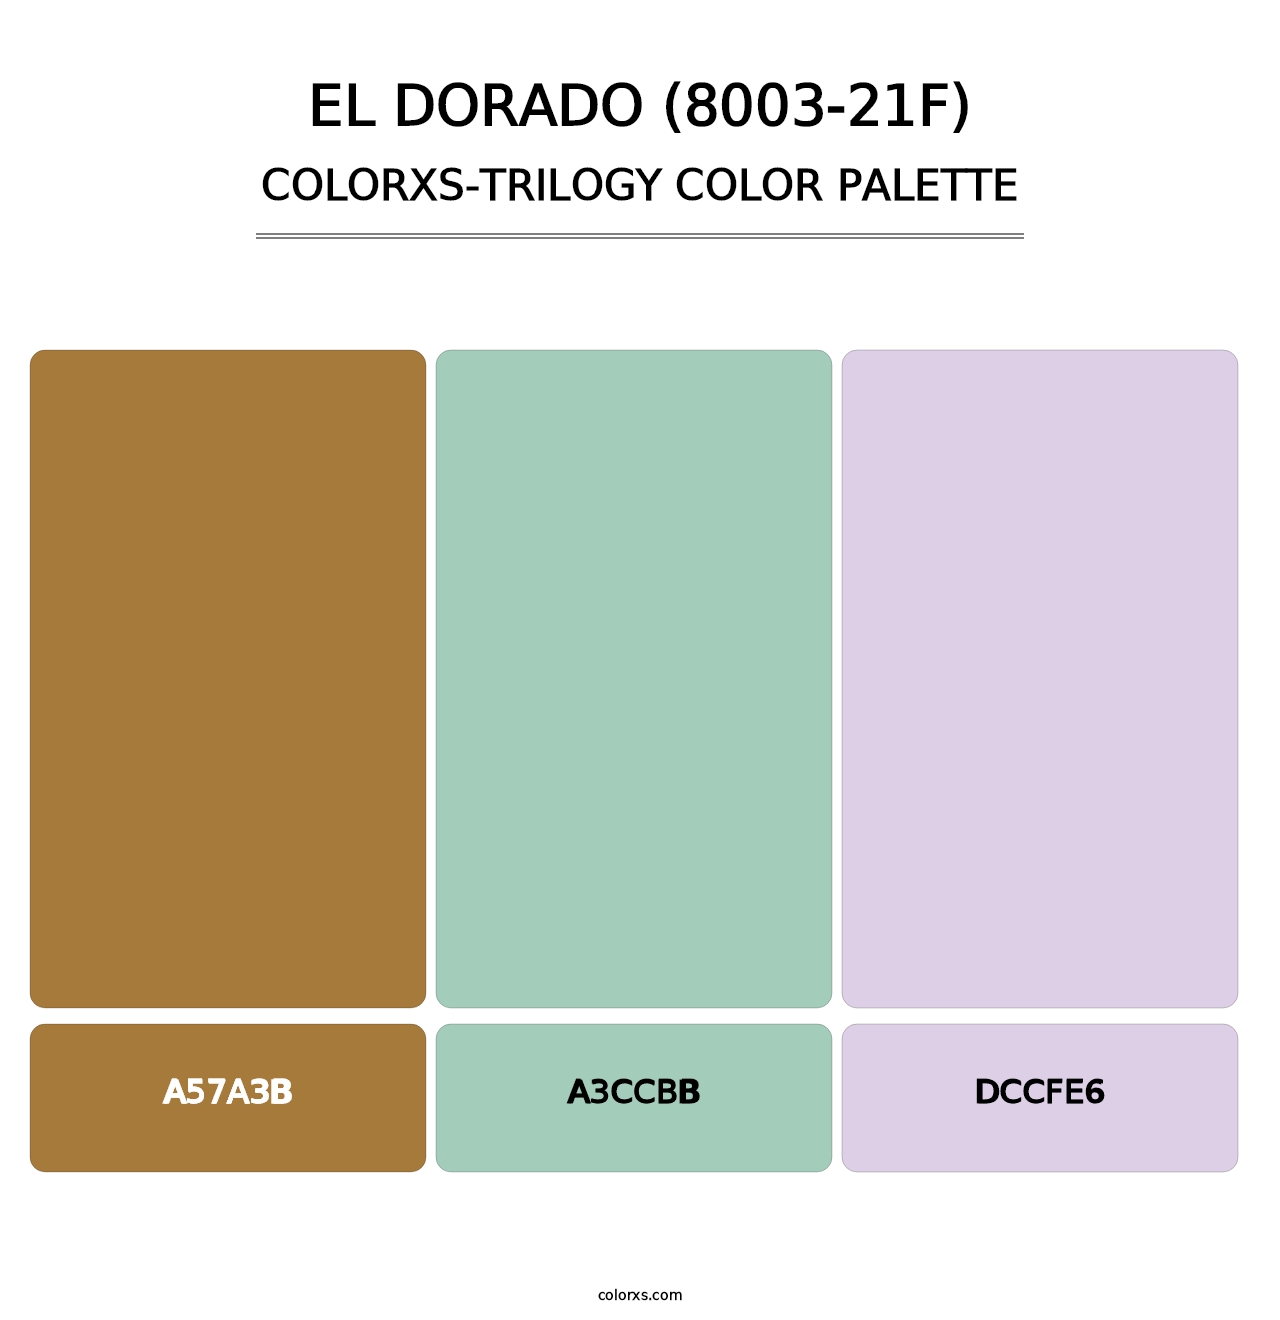 El Dorado (8003-21F) - Colorxs Trilogy Palette